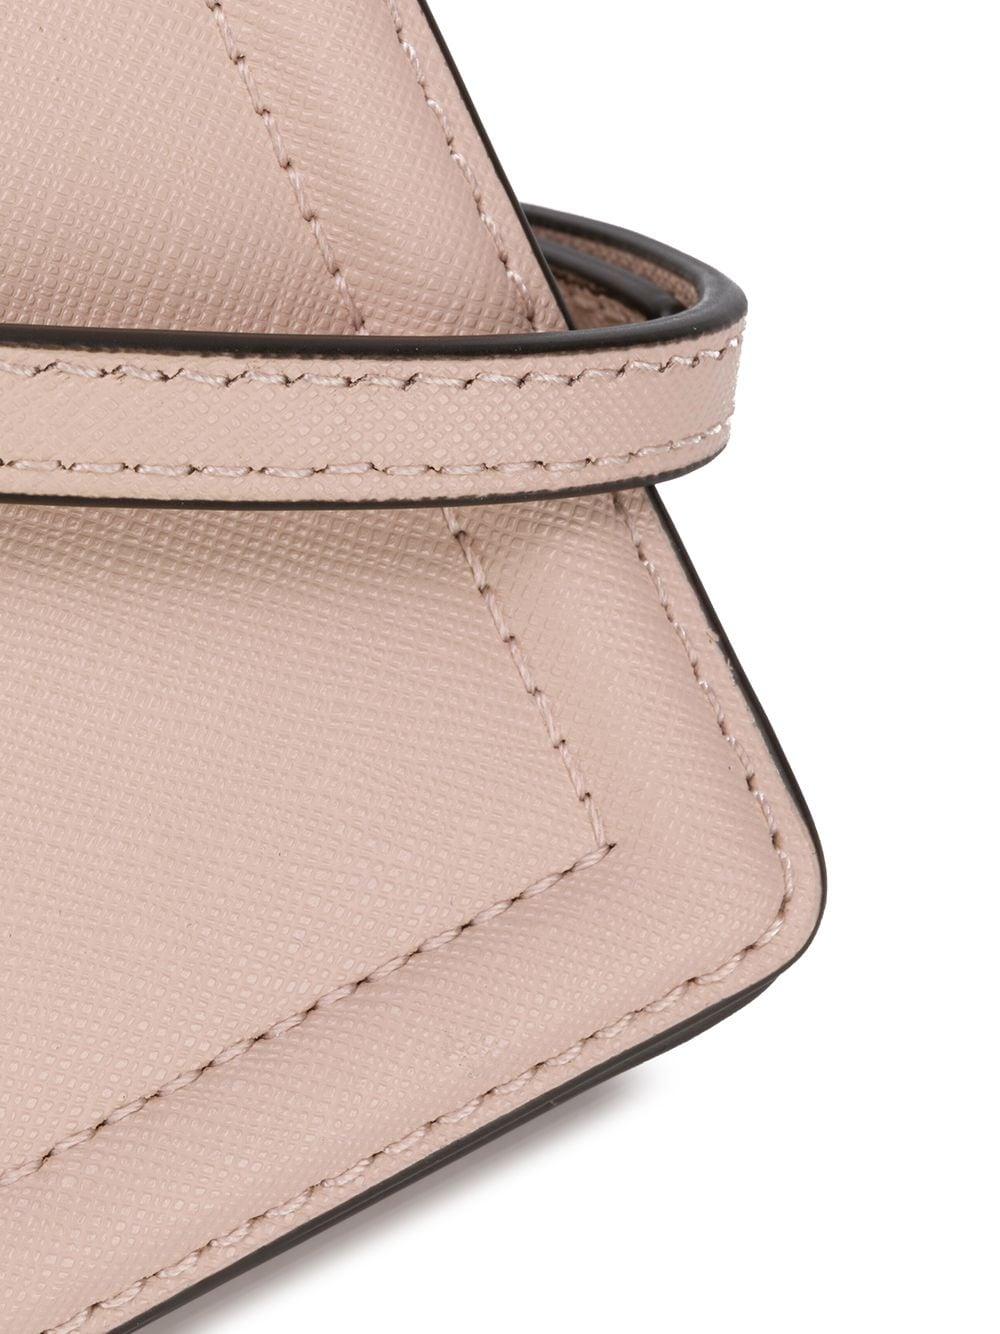 Michael Kors ☜SHOPPING☞ Jet Set Charm Crossgrain Leather Large Envelope  Phone Crossbody Bag / Pink 